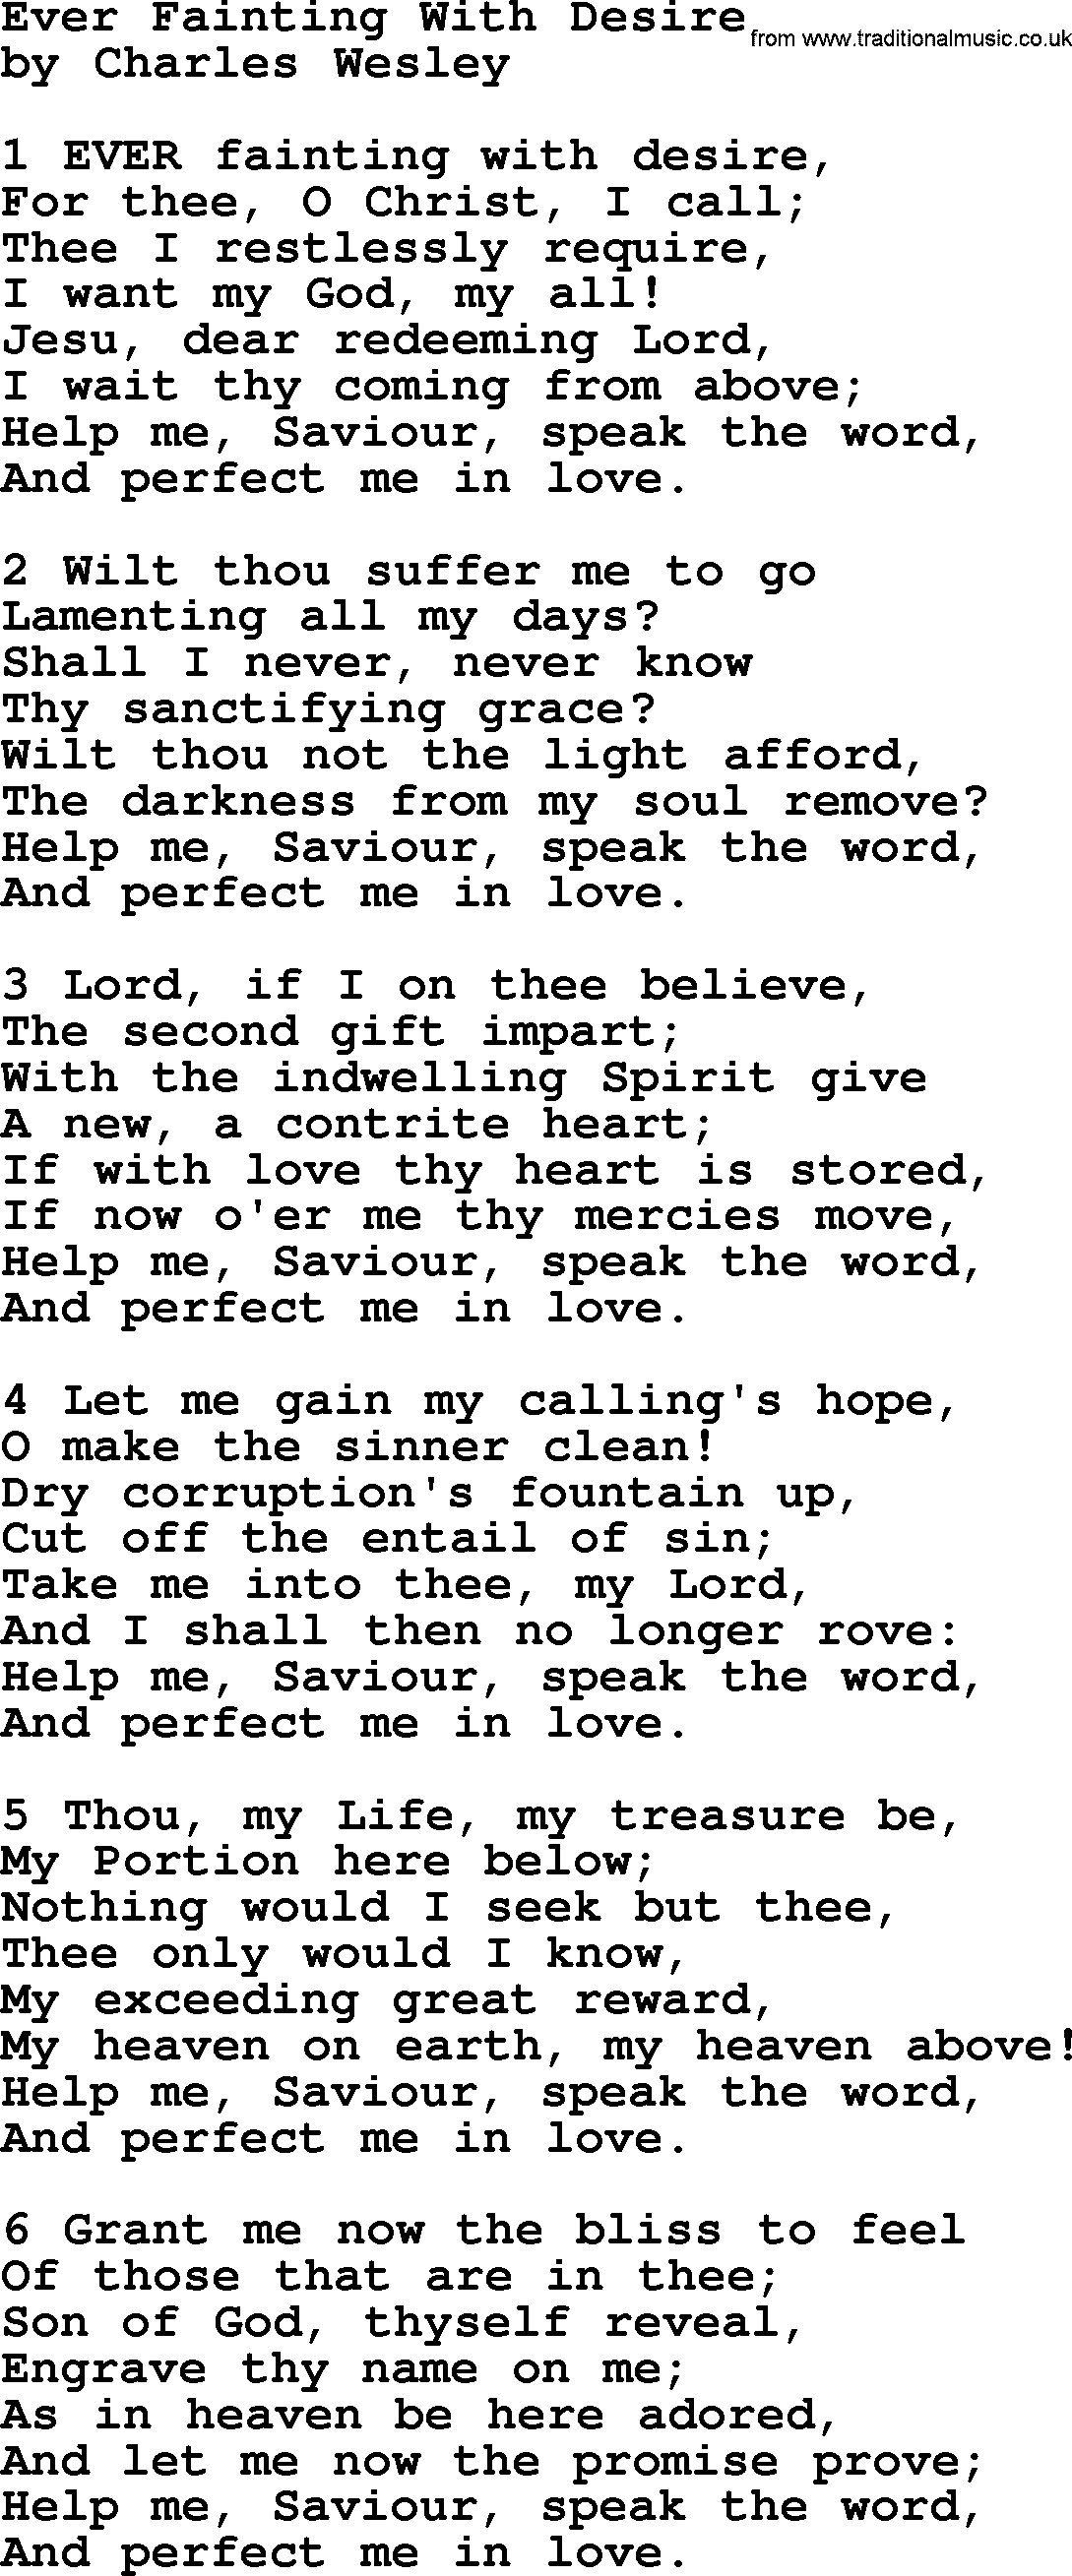 Charles Wesley hymn: Ever Fainting With Desire, lyrics